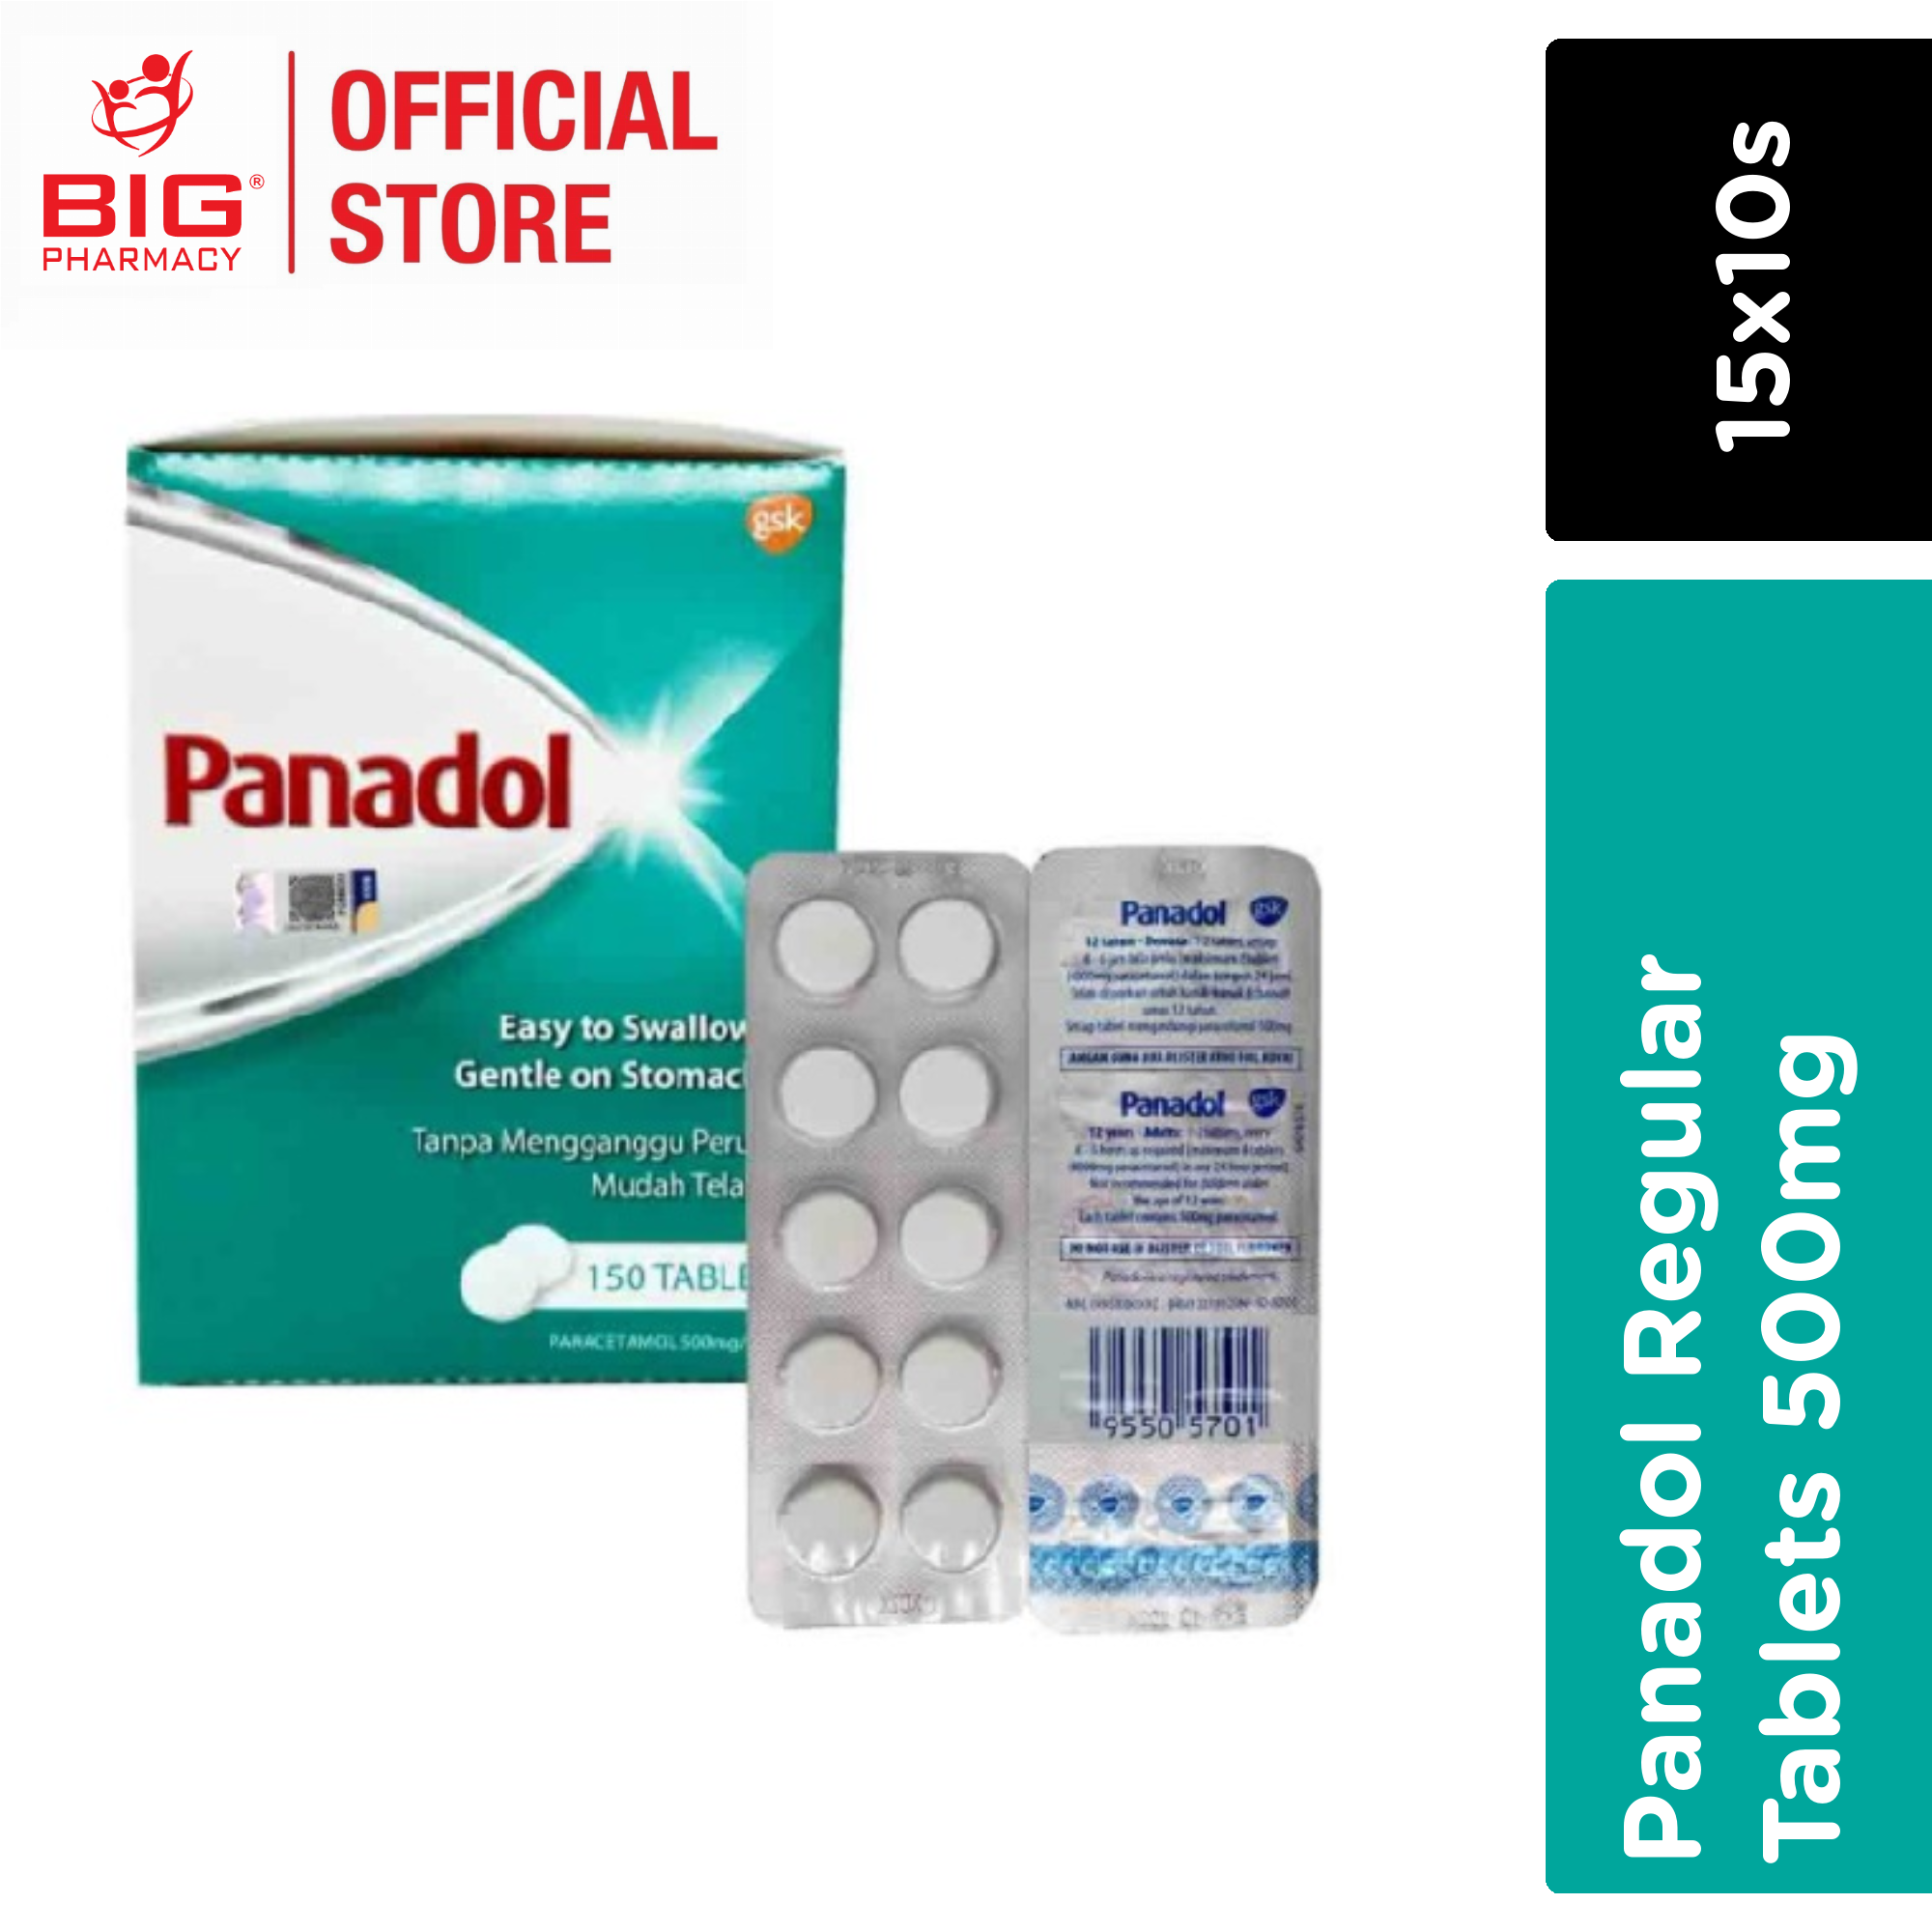 Panadol 150 tablet | Big Pharmacy